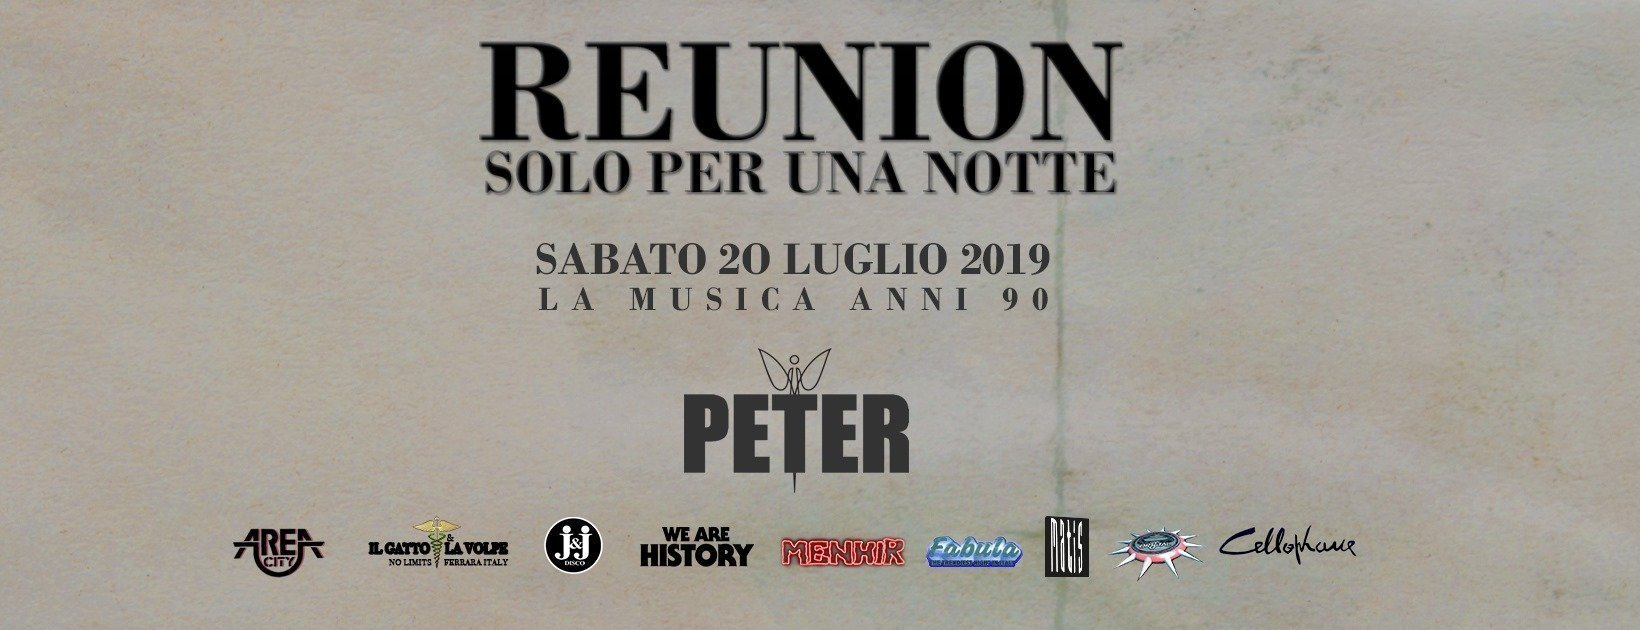 Peter Pan Riccione Reunion